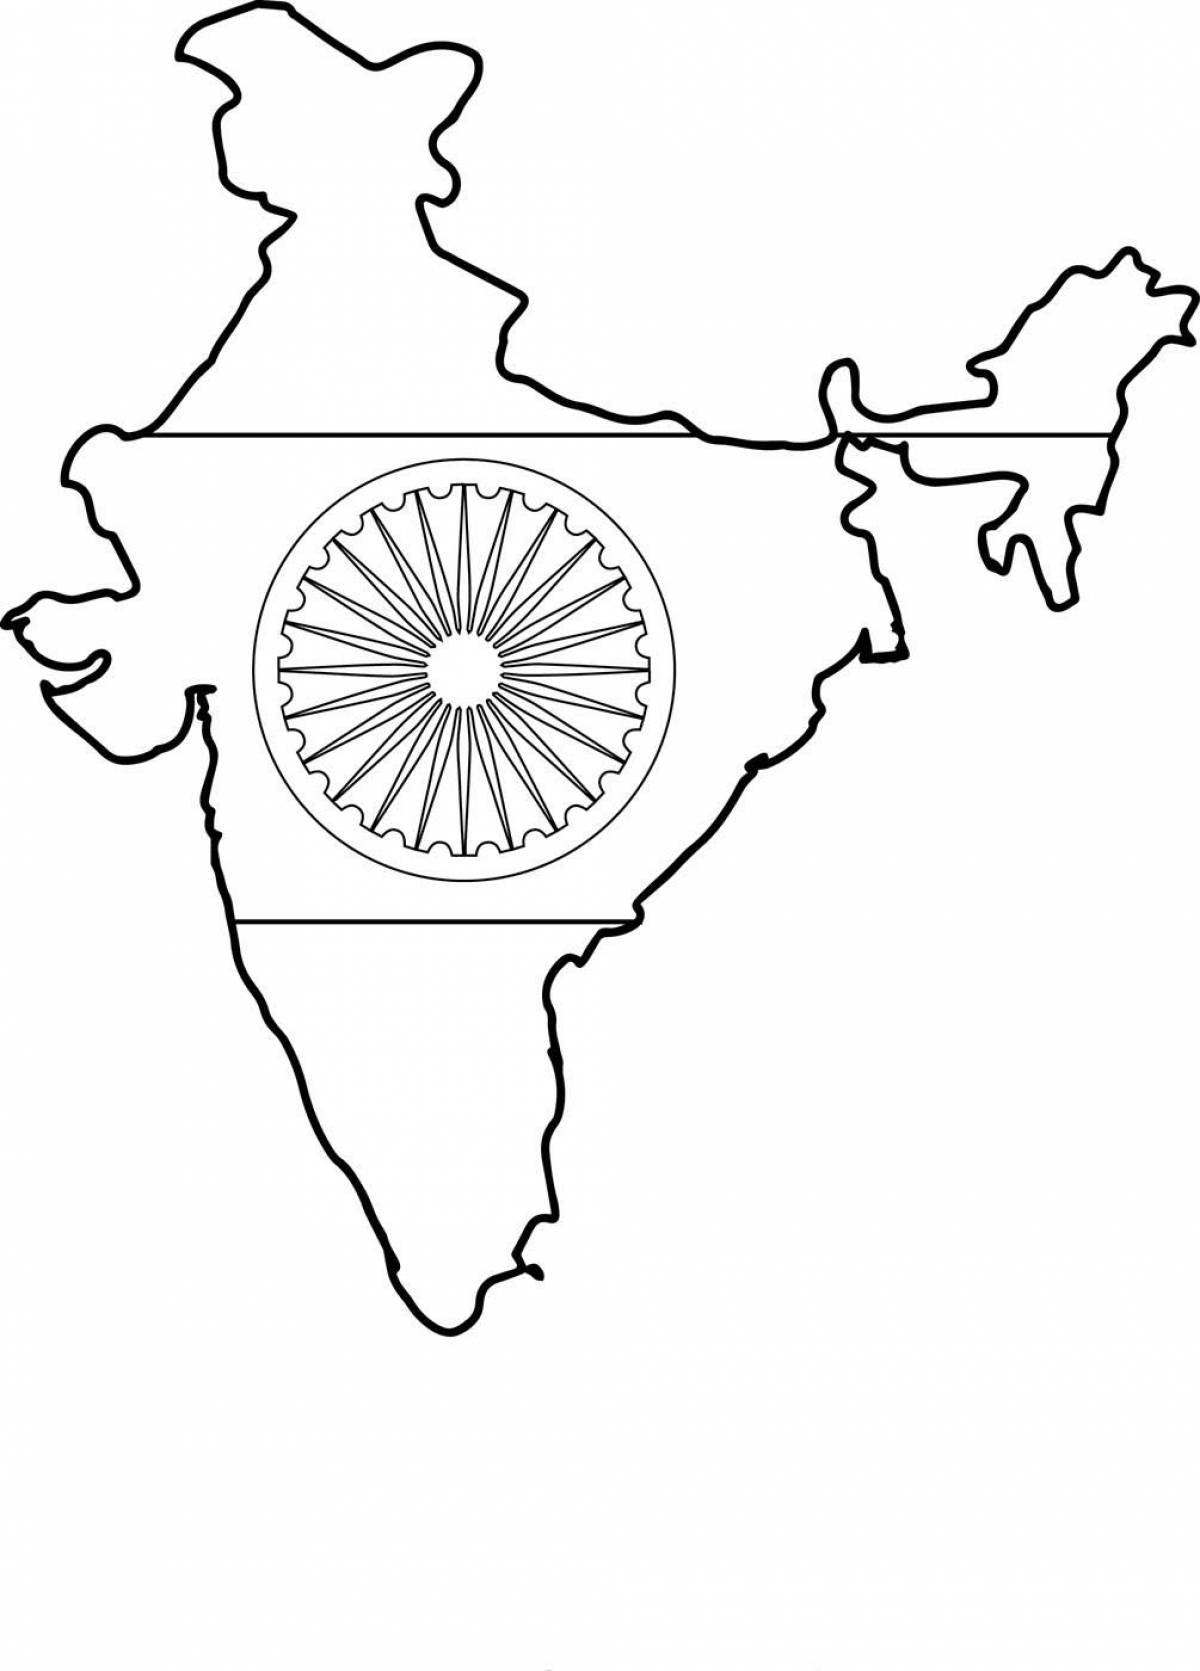 Карта индии